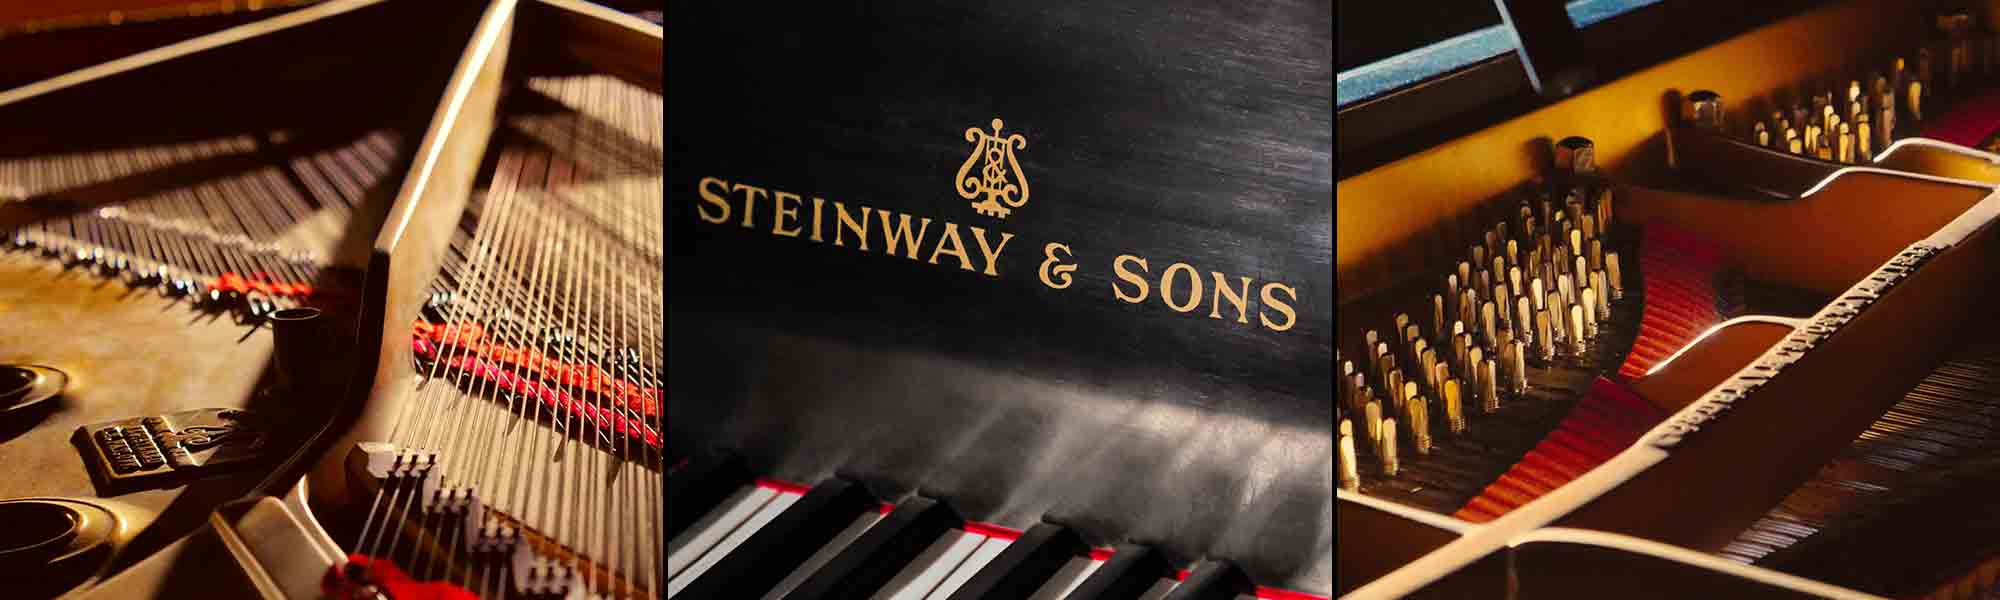 Steinway & Sons Hamburg D-274 concert grand piano